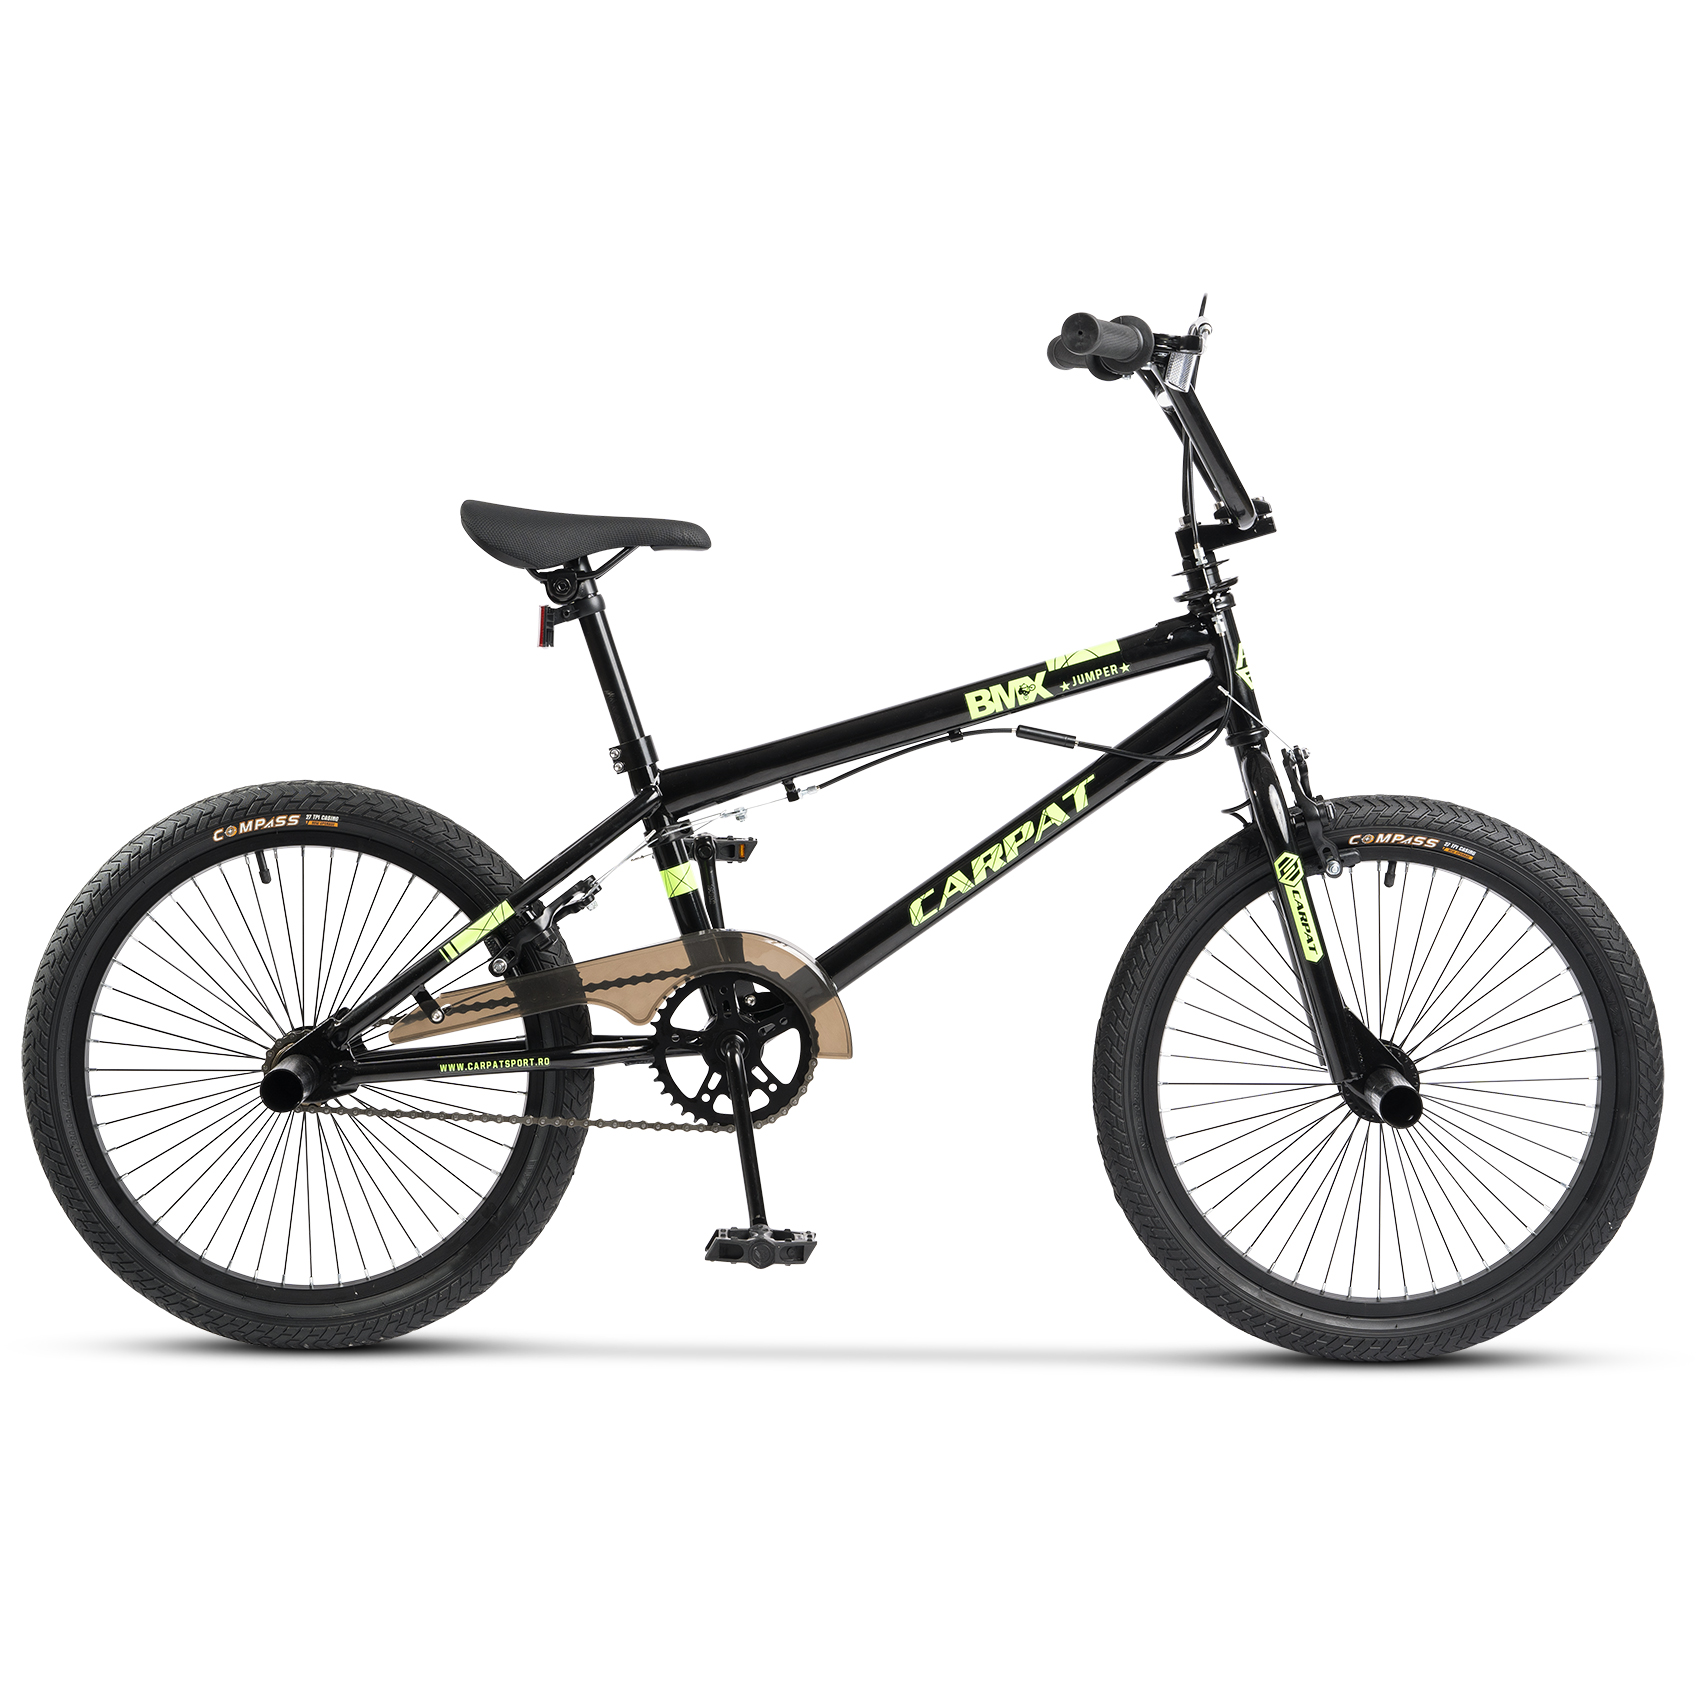 PROMO BICICLETE - Bicicleta BMX Carpat Jumper C2017A 20", Negru/Verde, carpatsport.ro